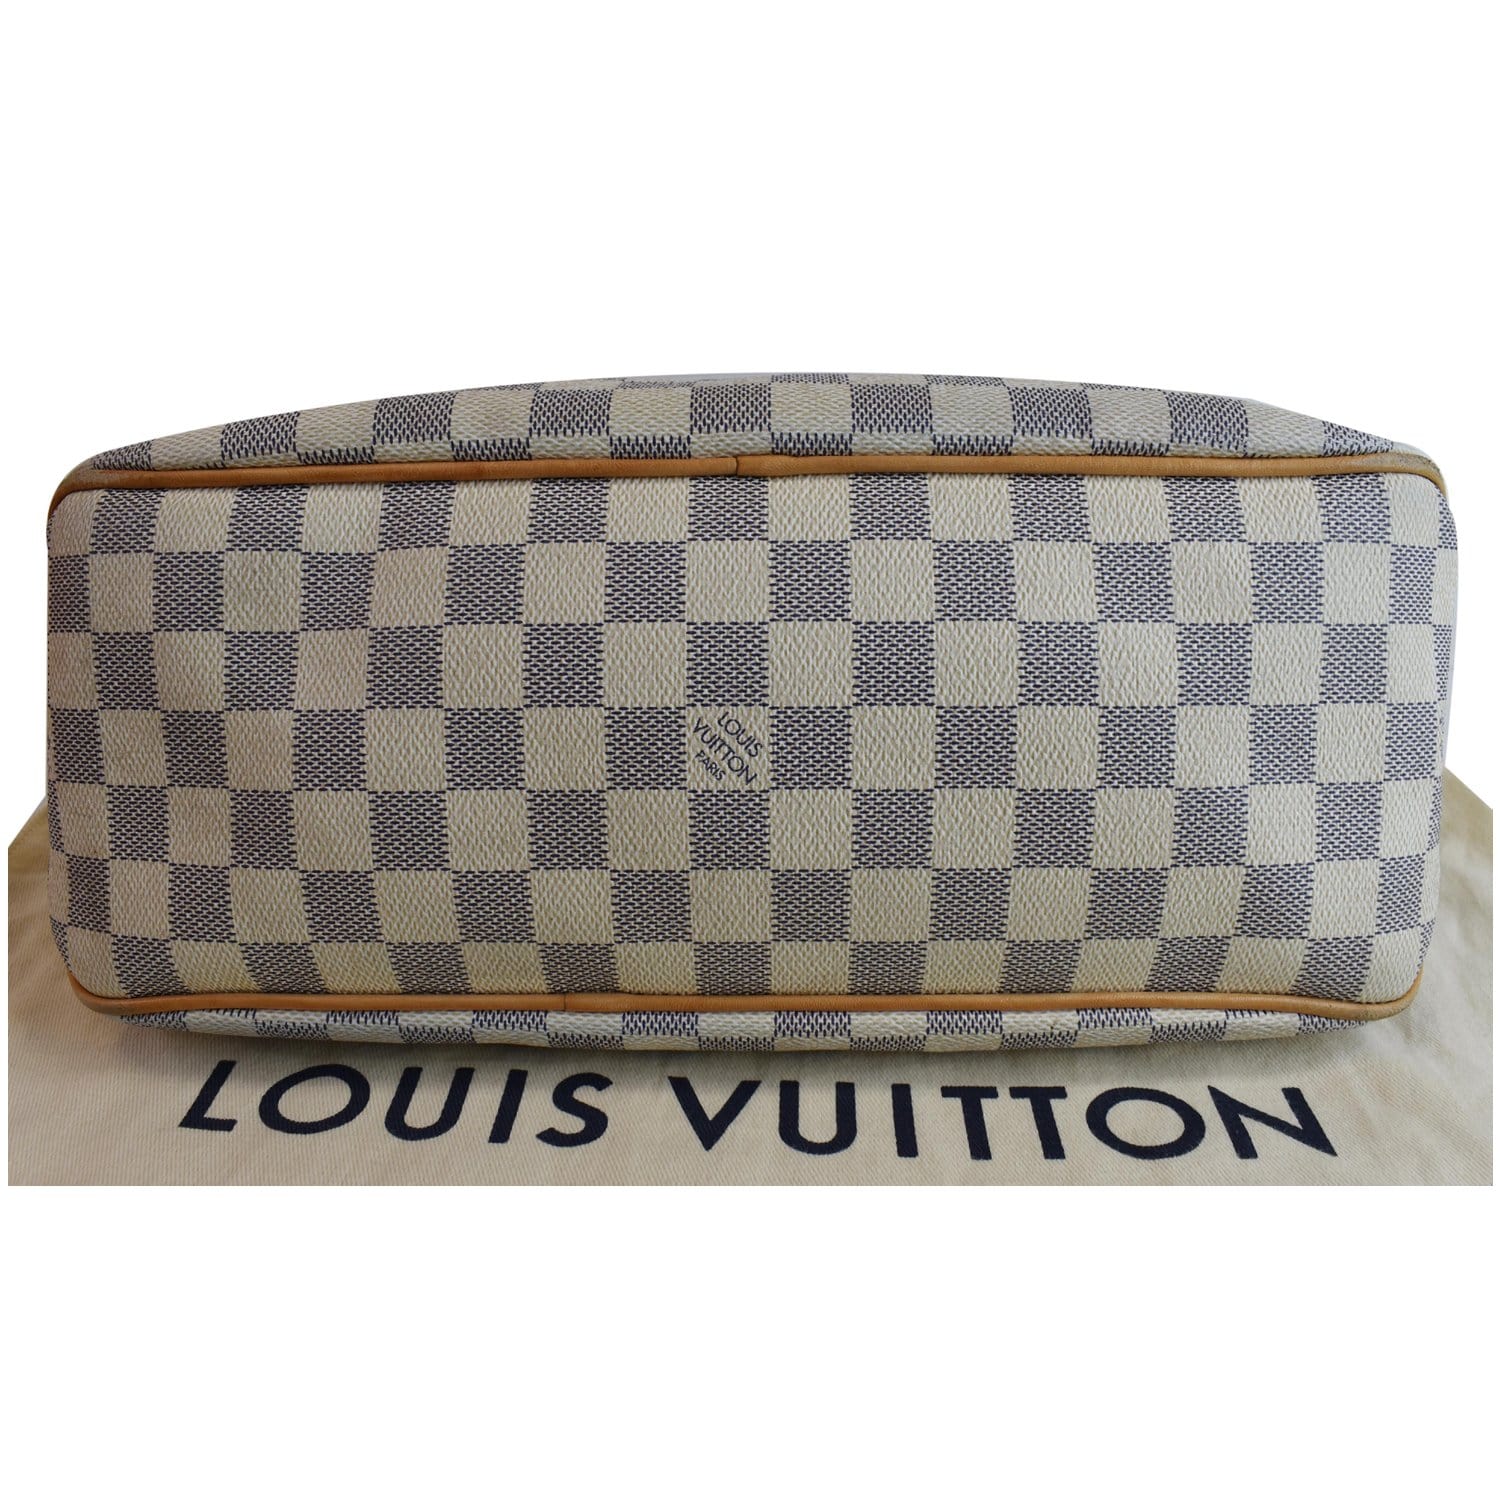 Newly released Louis Vuitton Delightful Damier Azur 